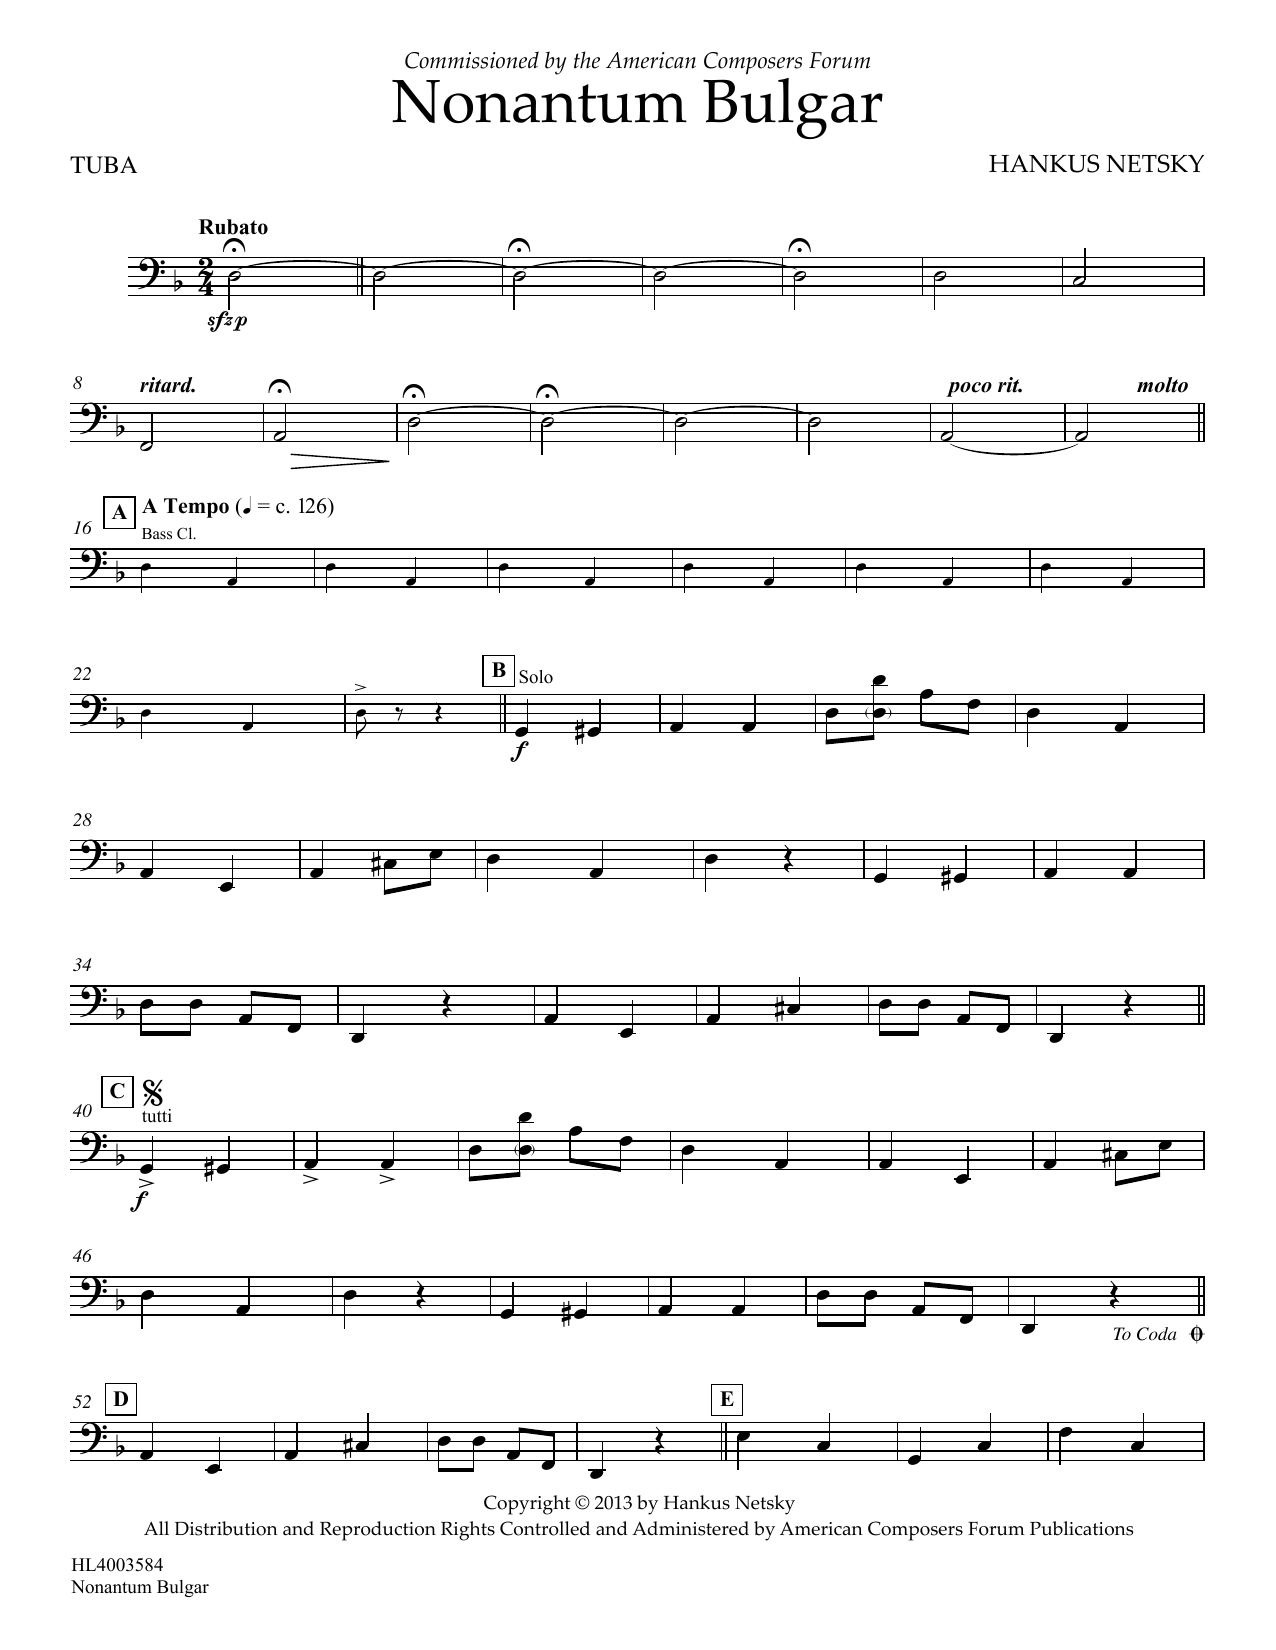 Hankus Netsky Nonantum Bulgar - Tuba Sheet Music Notes & Chords for Concert Band - Download or Print PDF